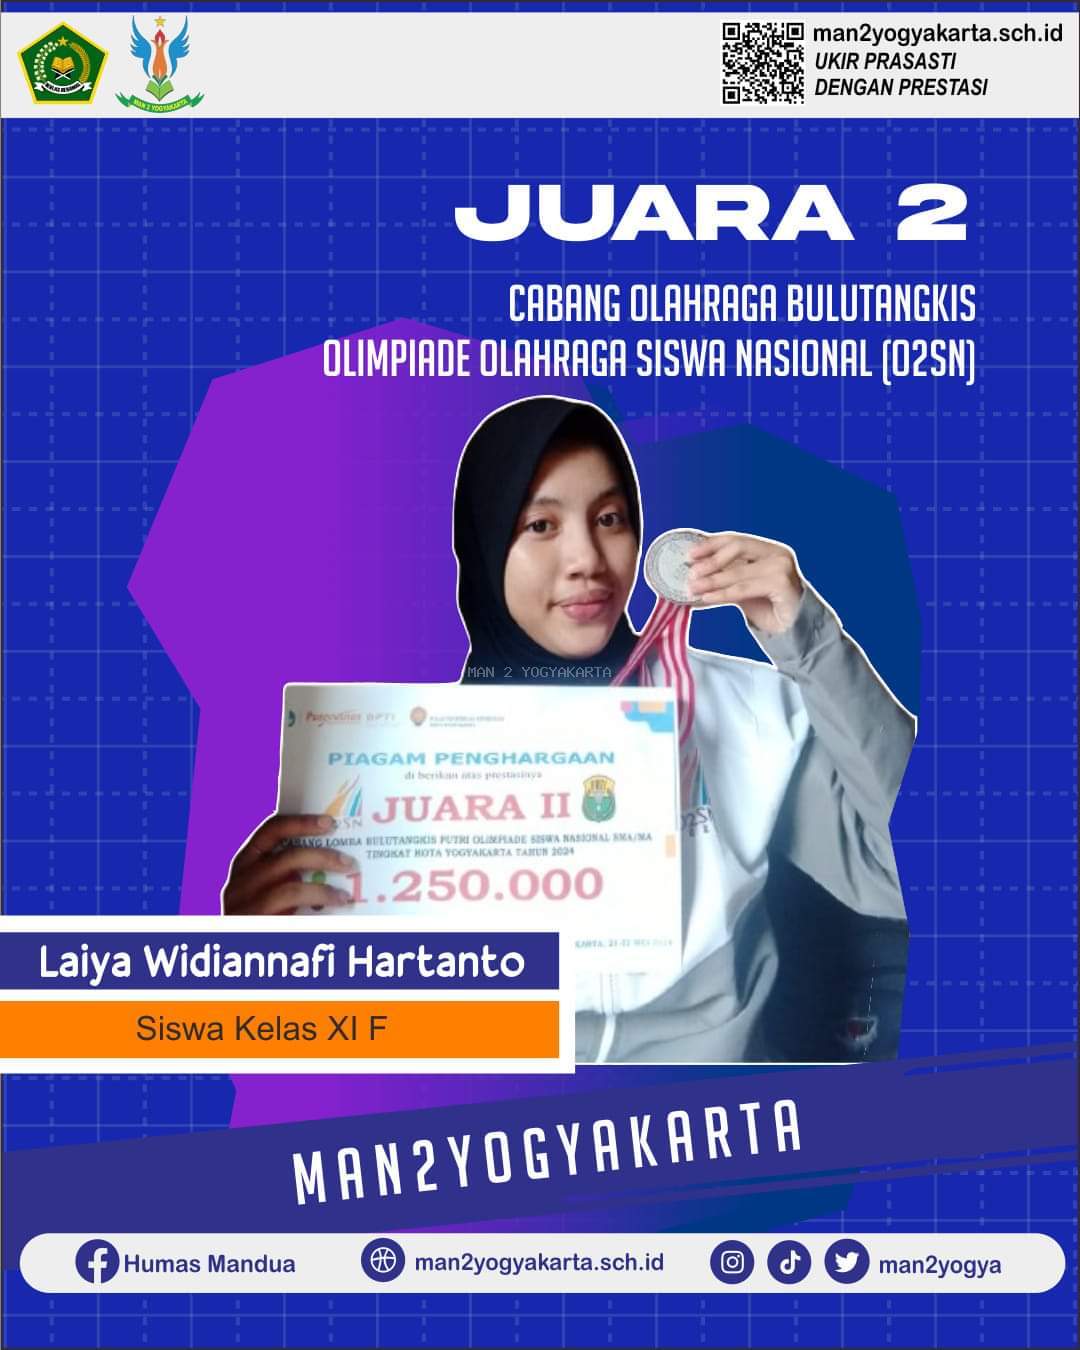 Laiya Widiannafi Hartanto Siswa MAN 2 Yogyakarta Sabet Medali Perak di Ajang O2SN Yogyakarta